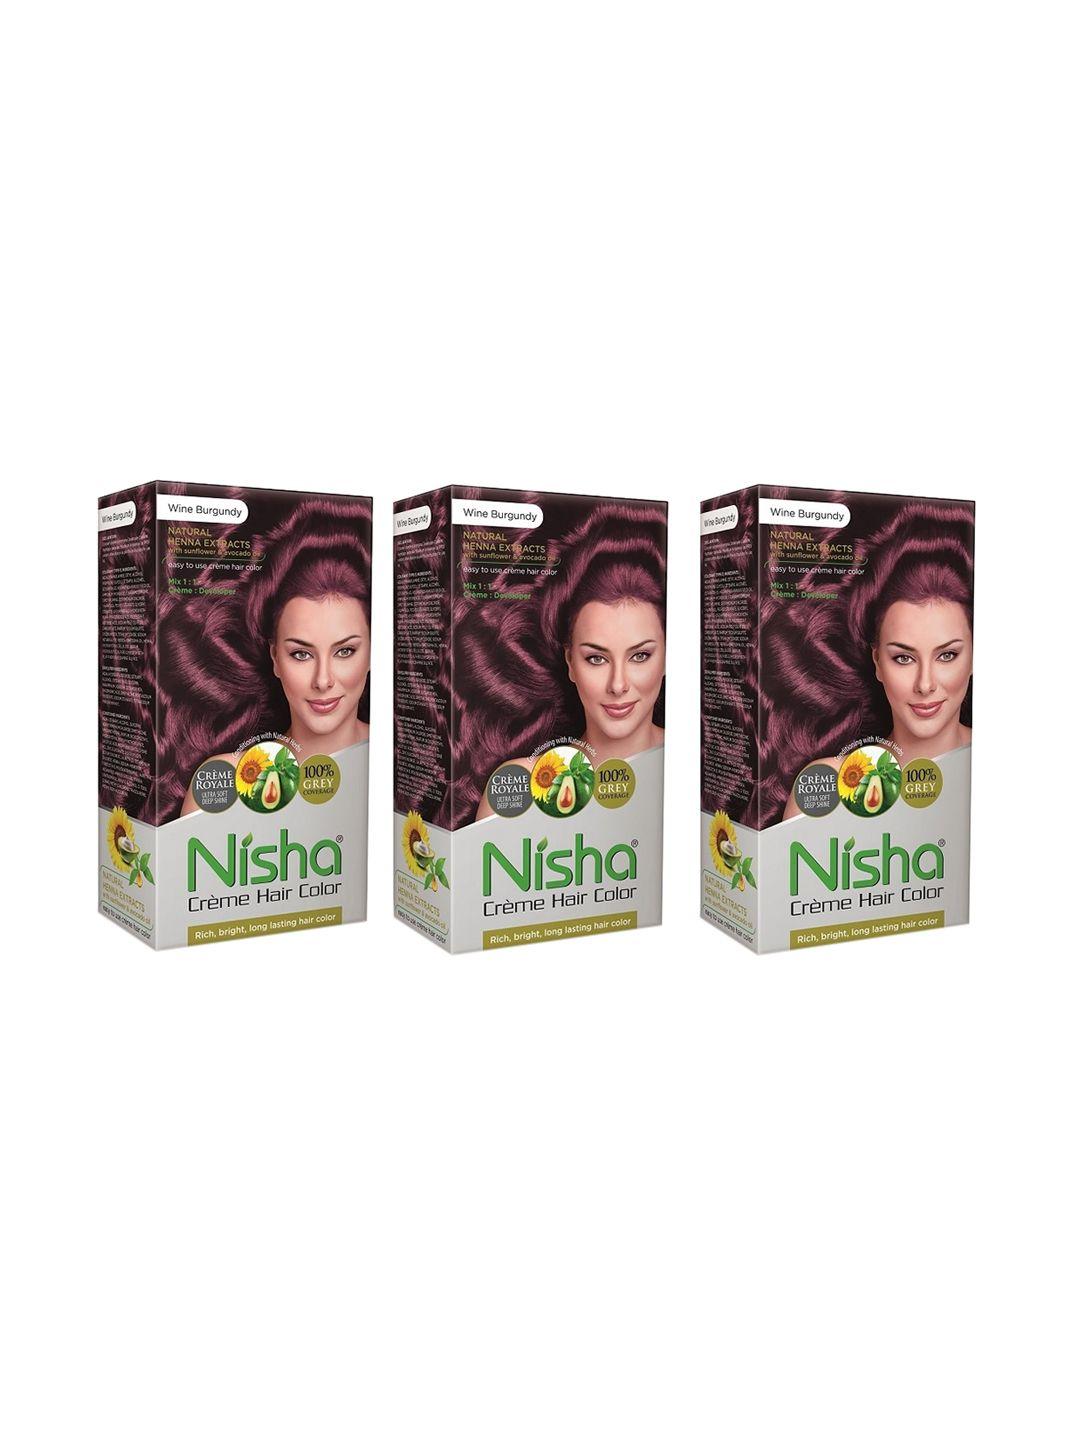 nisha unisex burgundy pack of 3 creme hair color 120gm each- wine burgundy